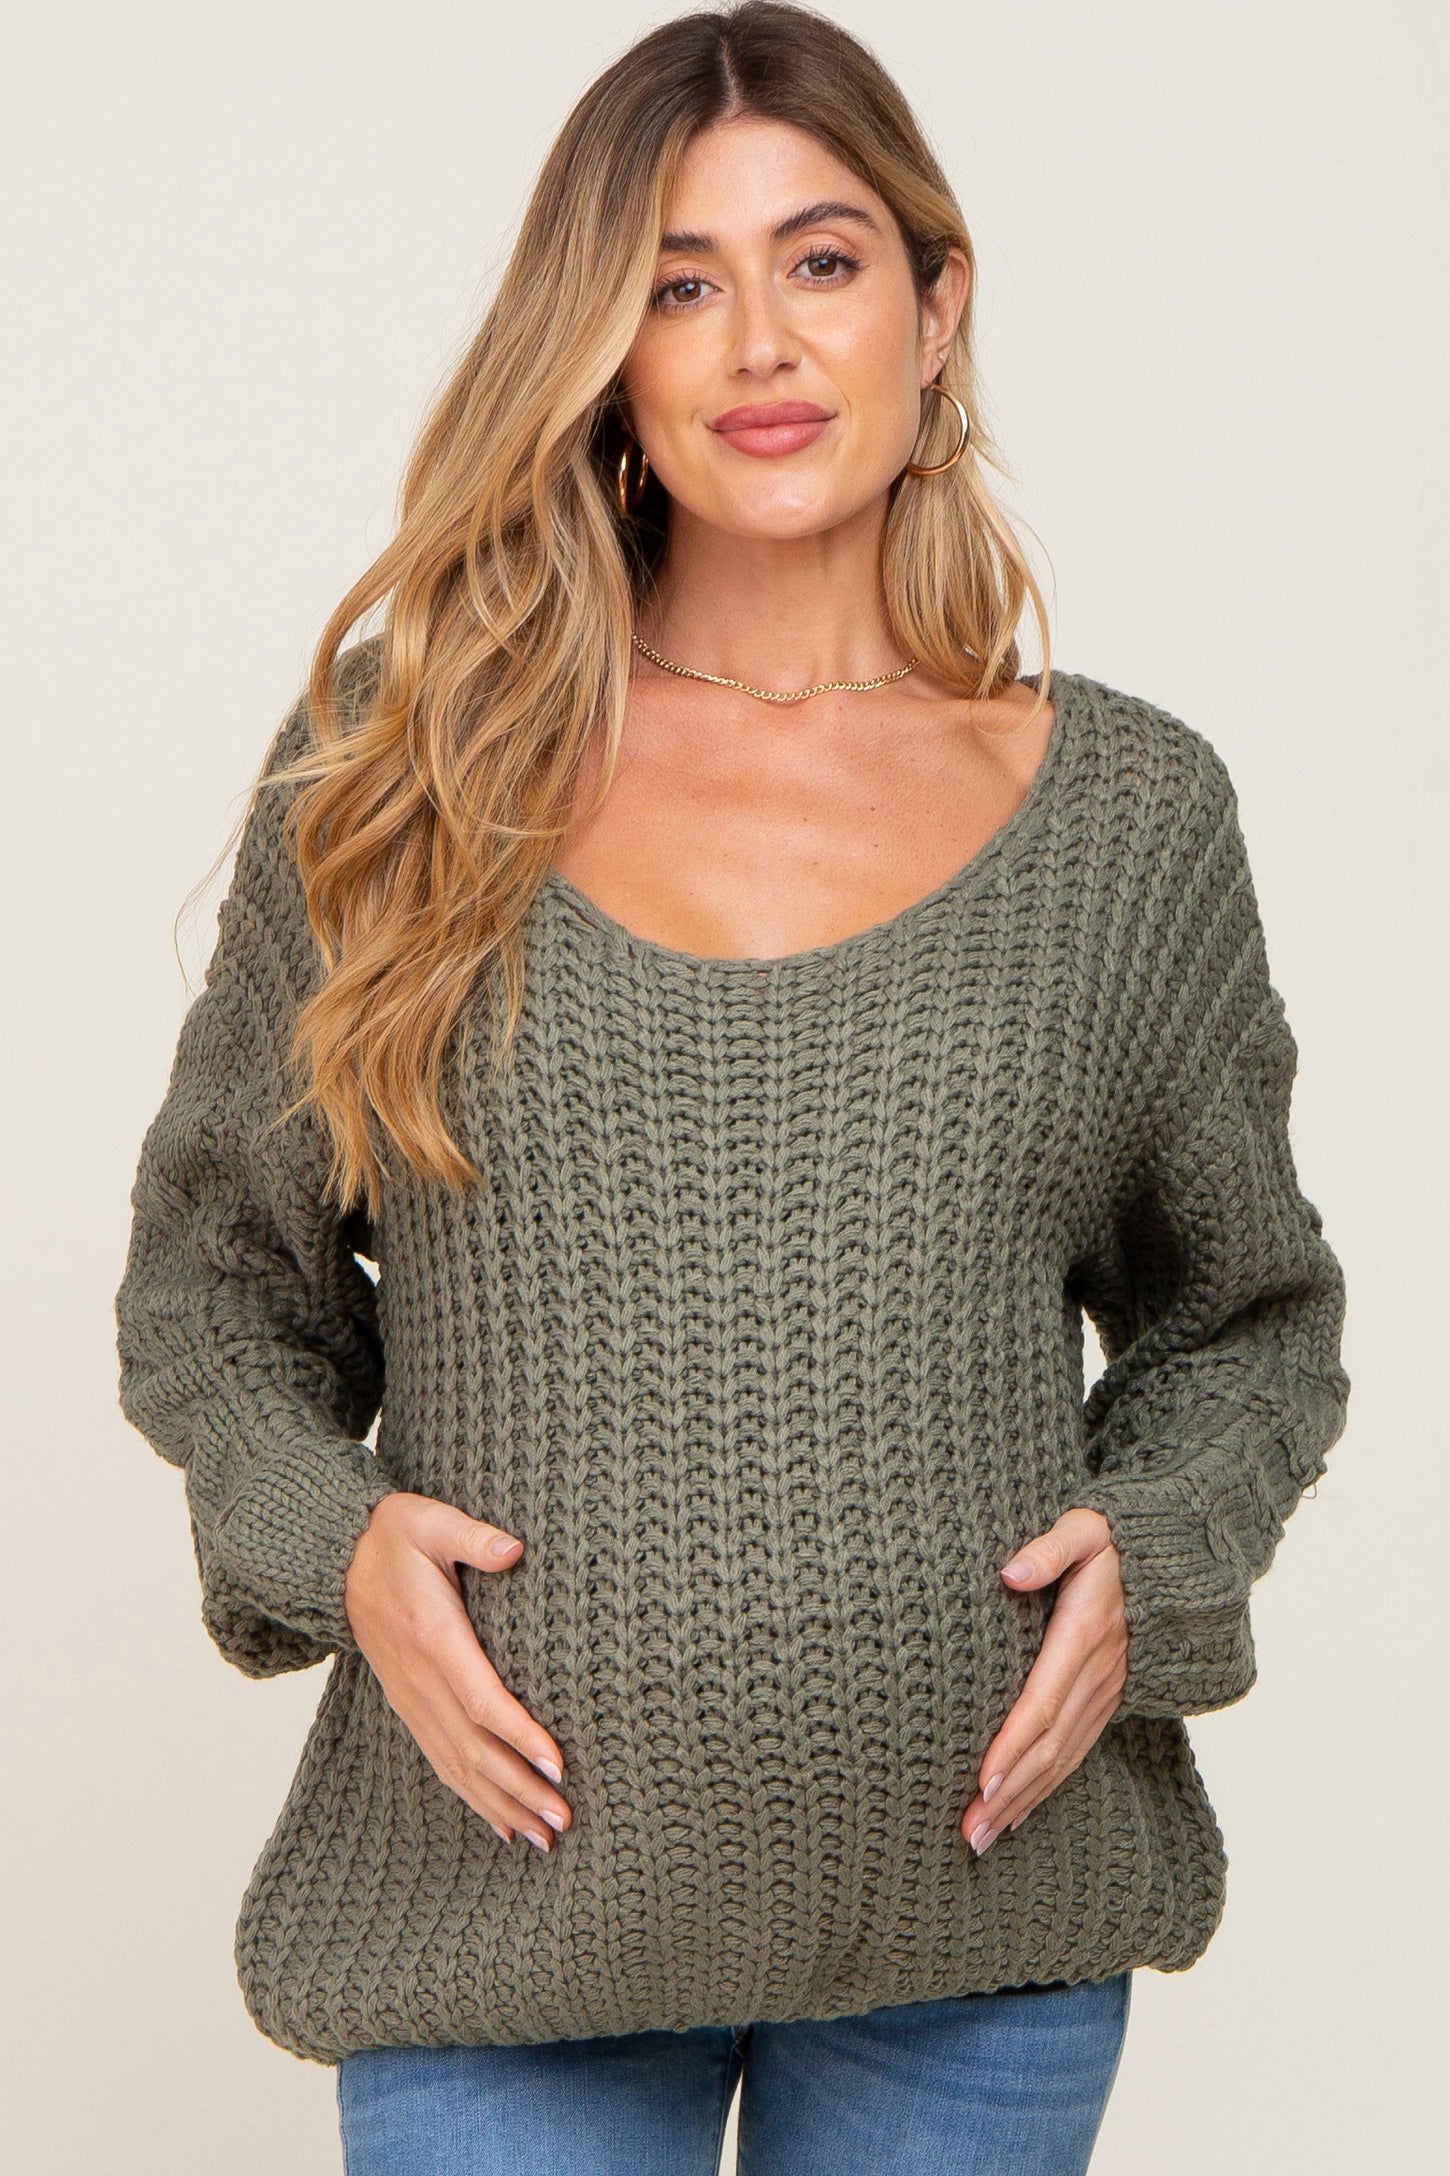 Olive Chunky Knit Maternity Sweater